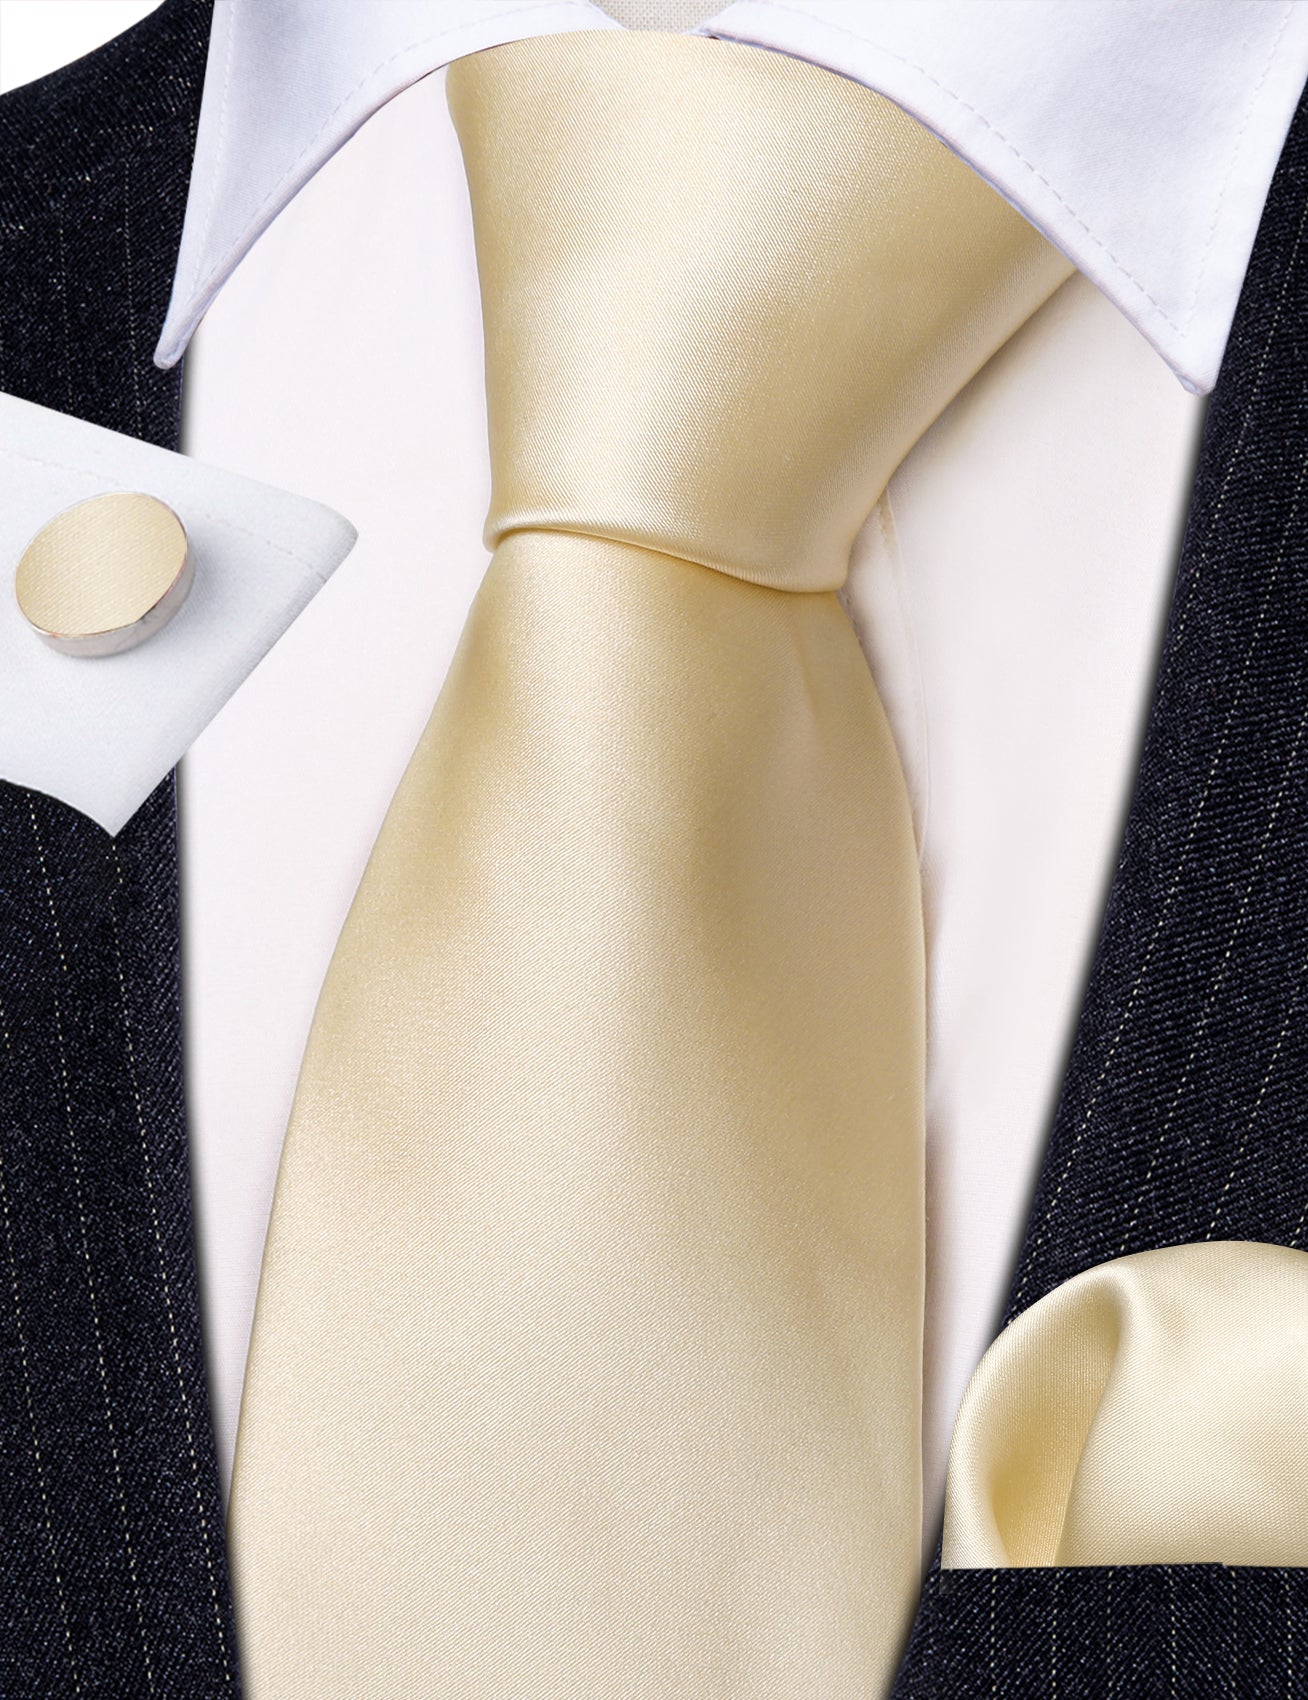 Lemon Yellow Solid Silk Tie Handkerchief Cufflinks Set